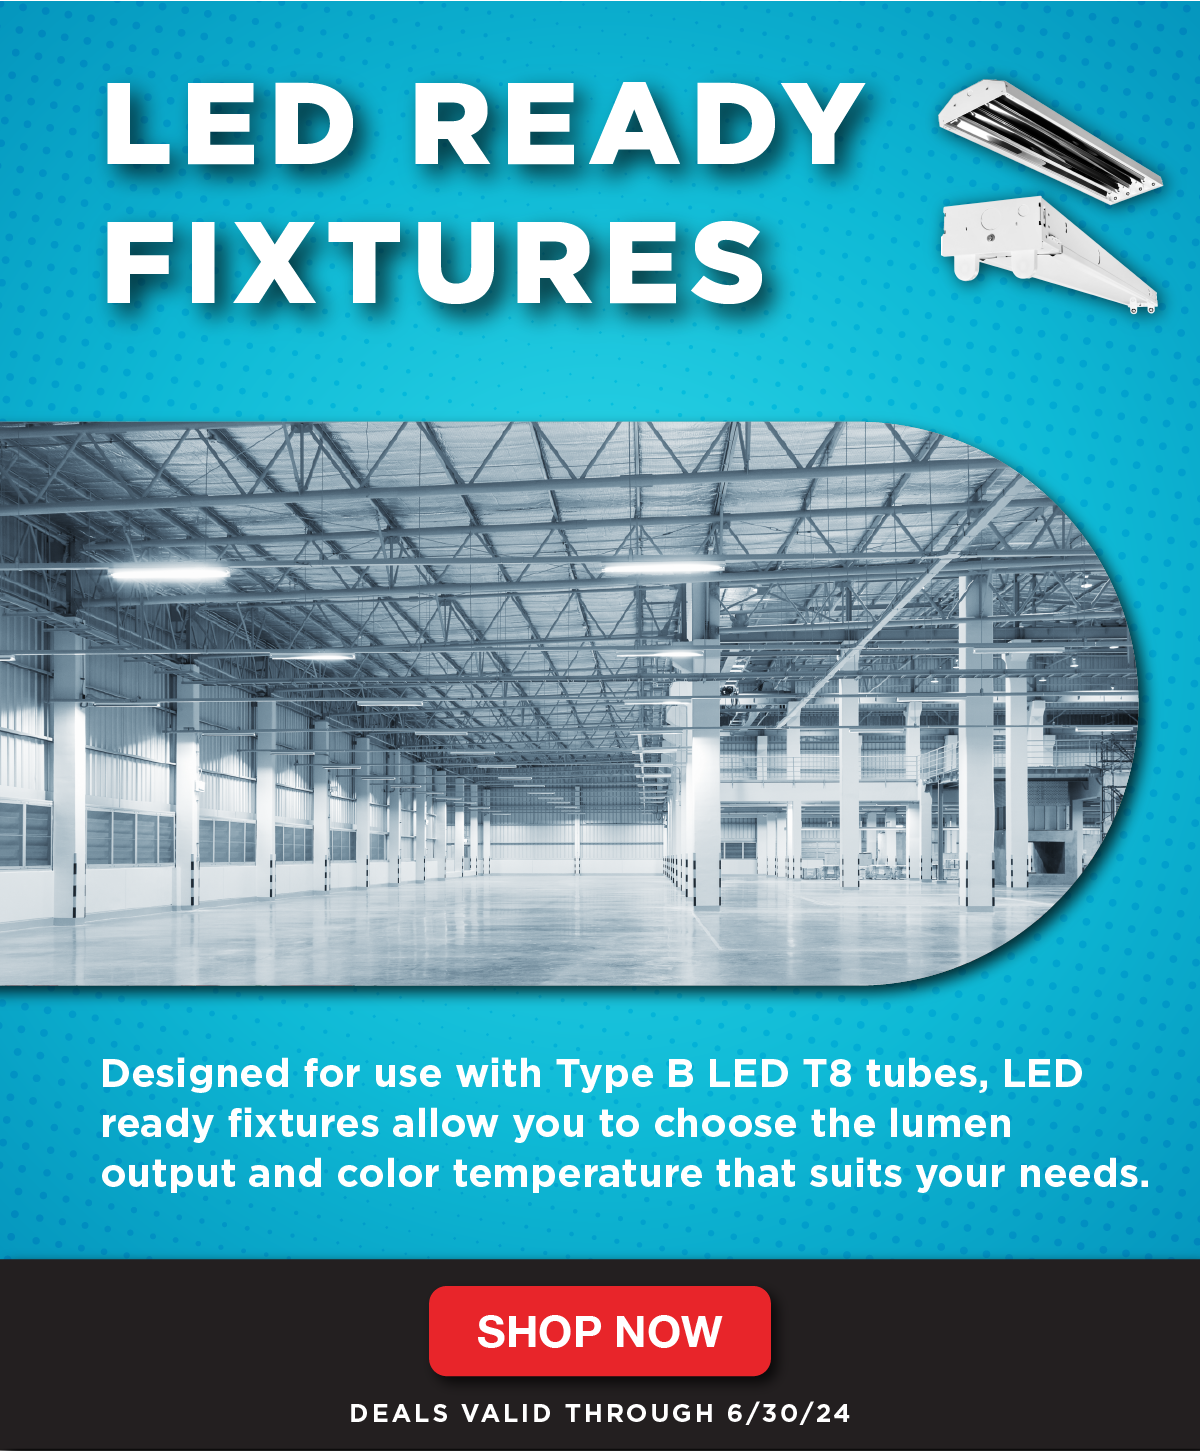 LED Ready Fixtures